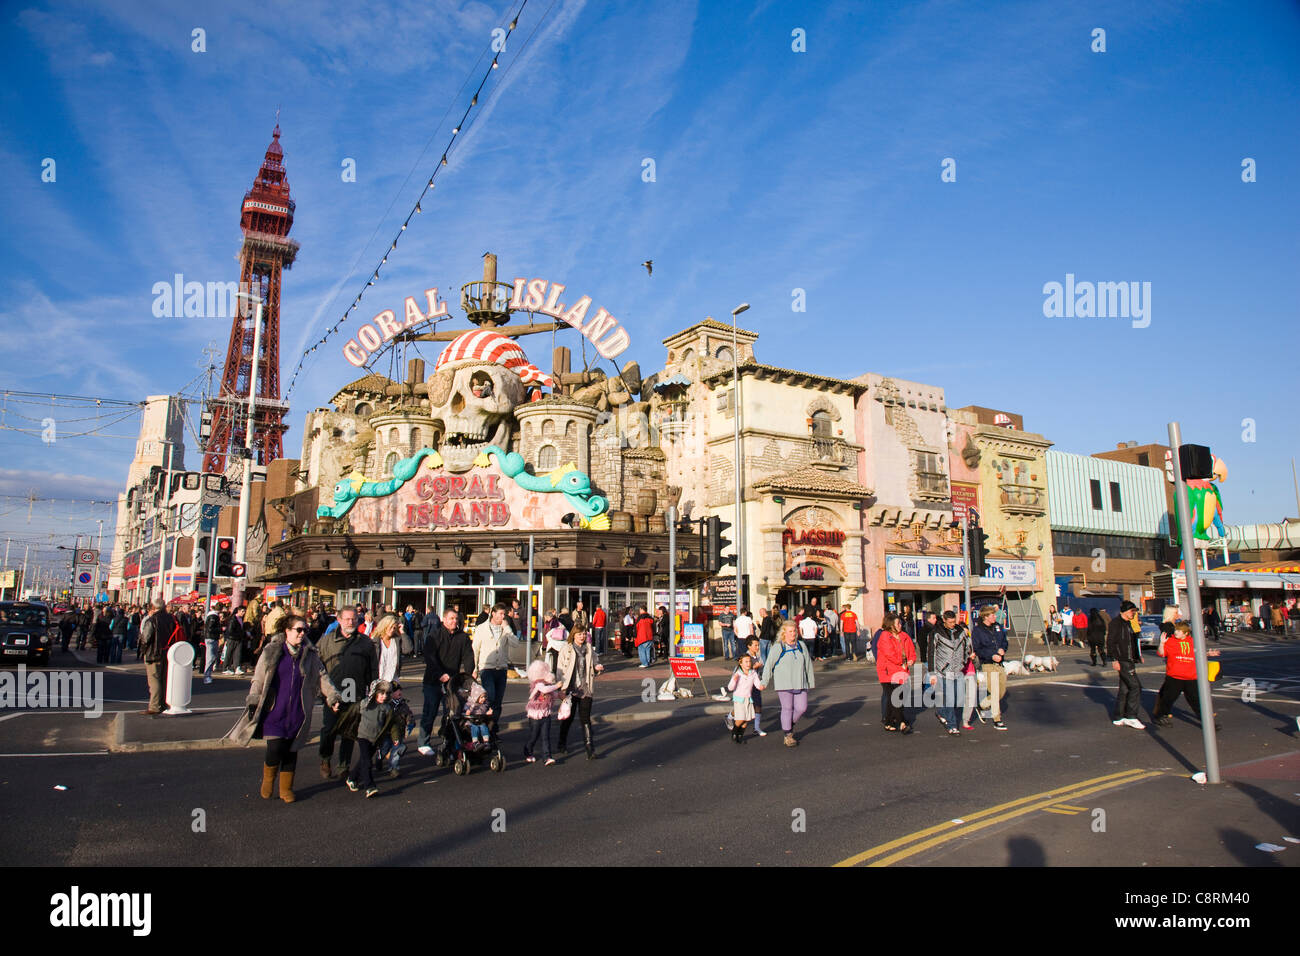 Blackpool tower and Coral Island, Blackpool, UK Stock Photo